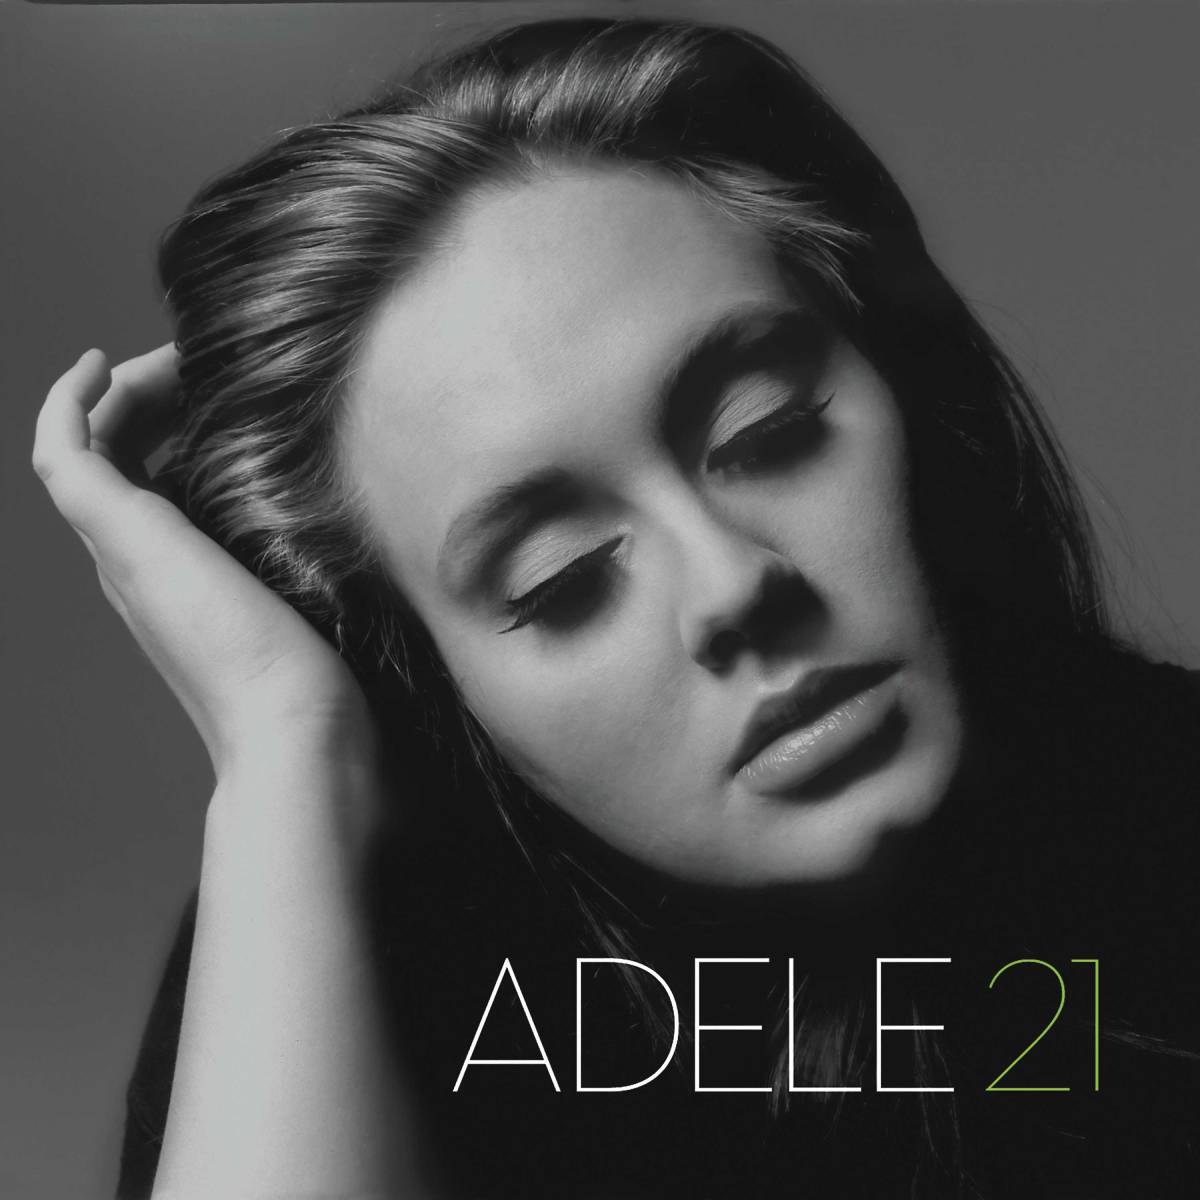 "21" - album by singer Adele (cover)